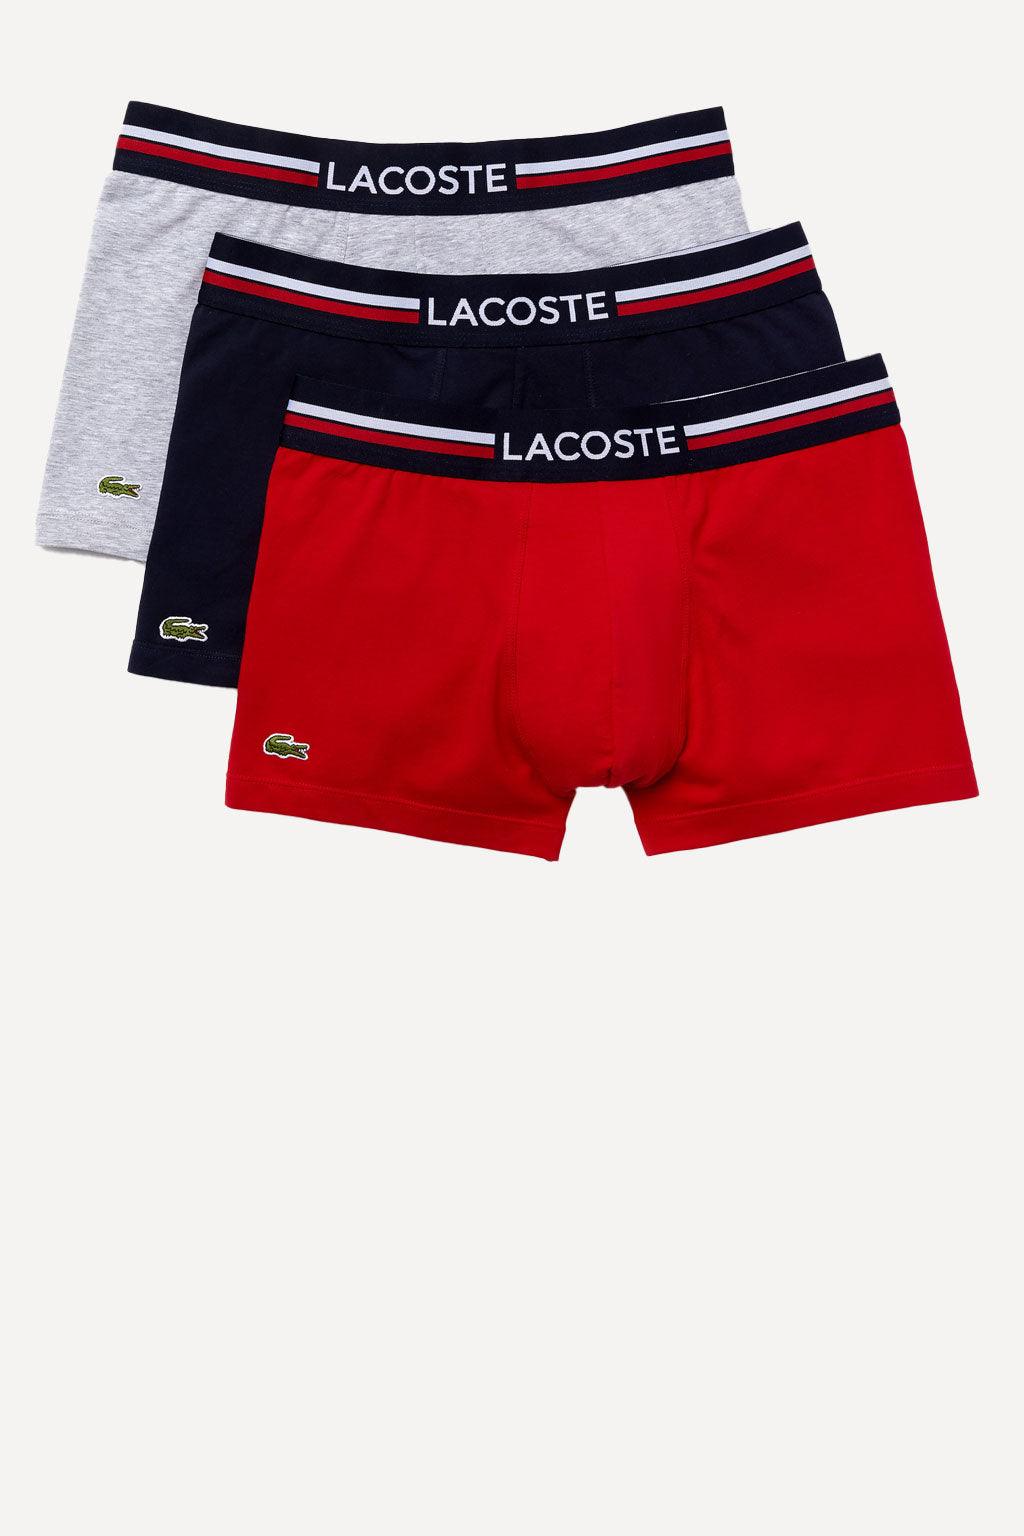 Lacoste underwear |  Big Boss | the menswear concept.